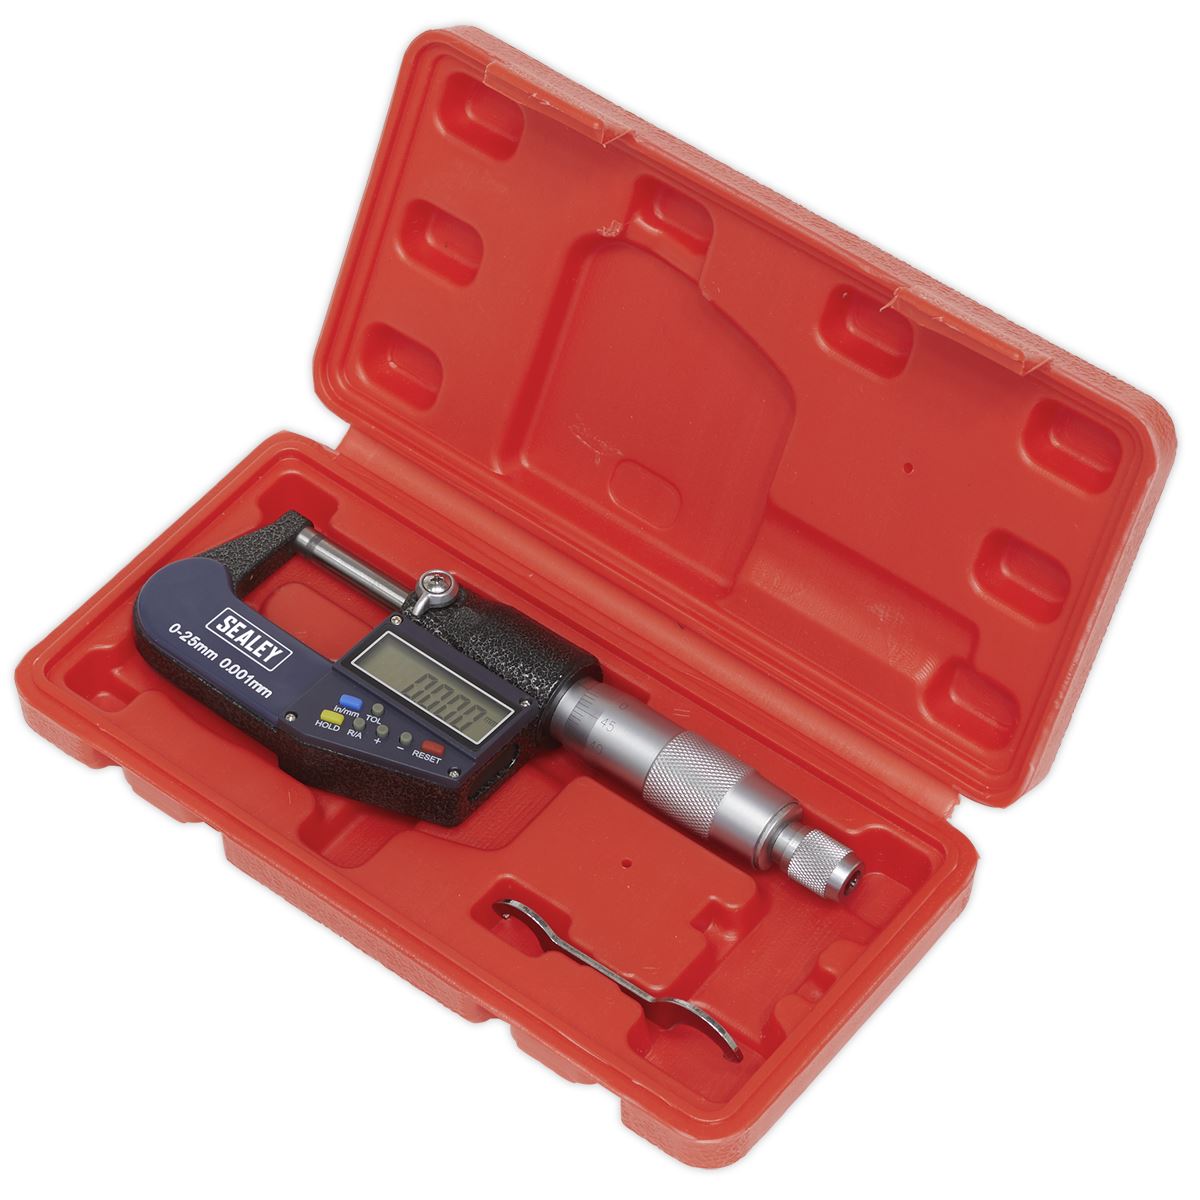 Sealey Digital External Micrometer 0-25mm(0-1") AK9635D